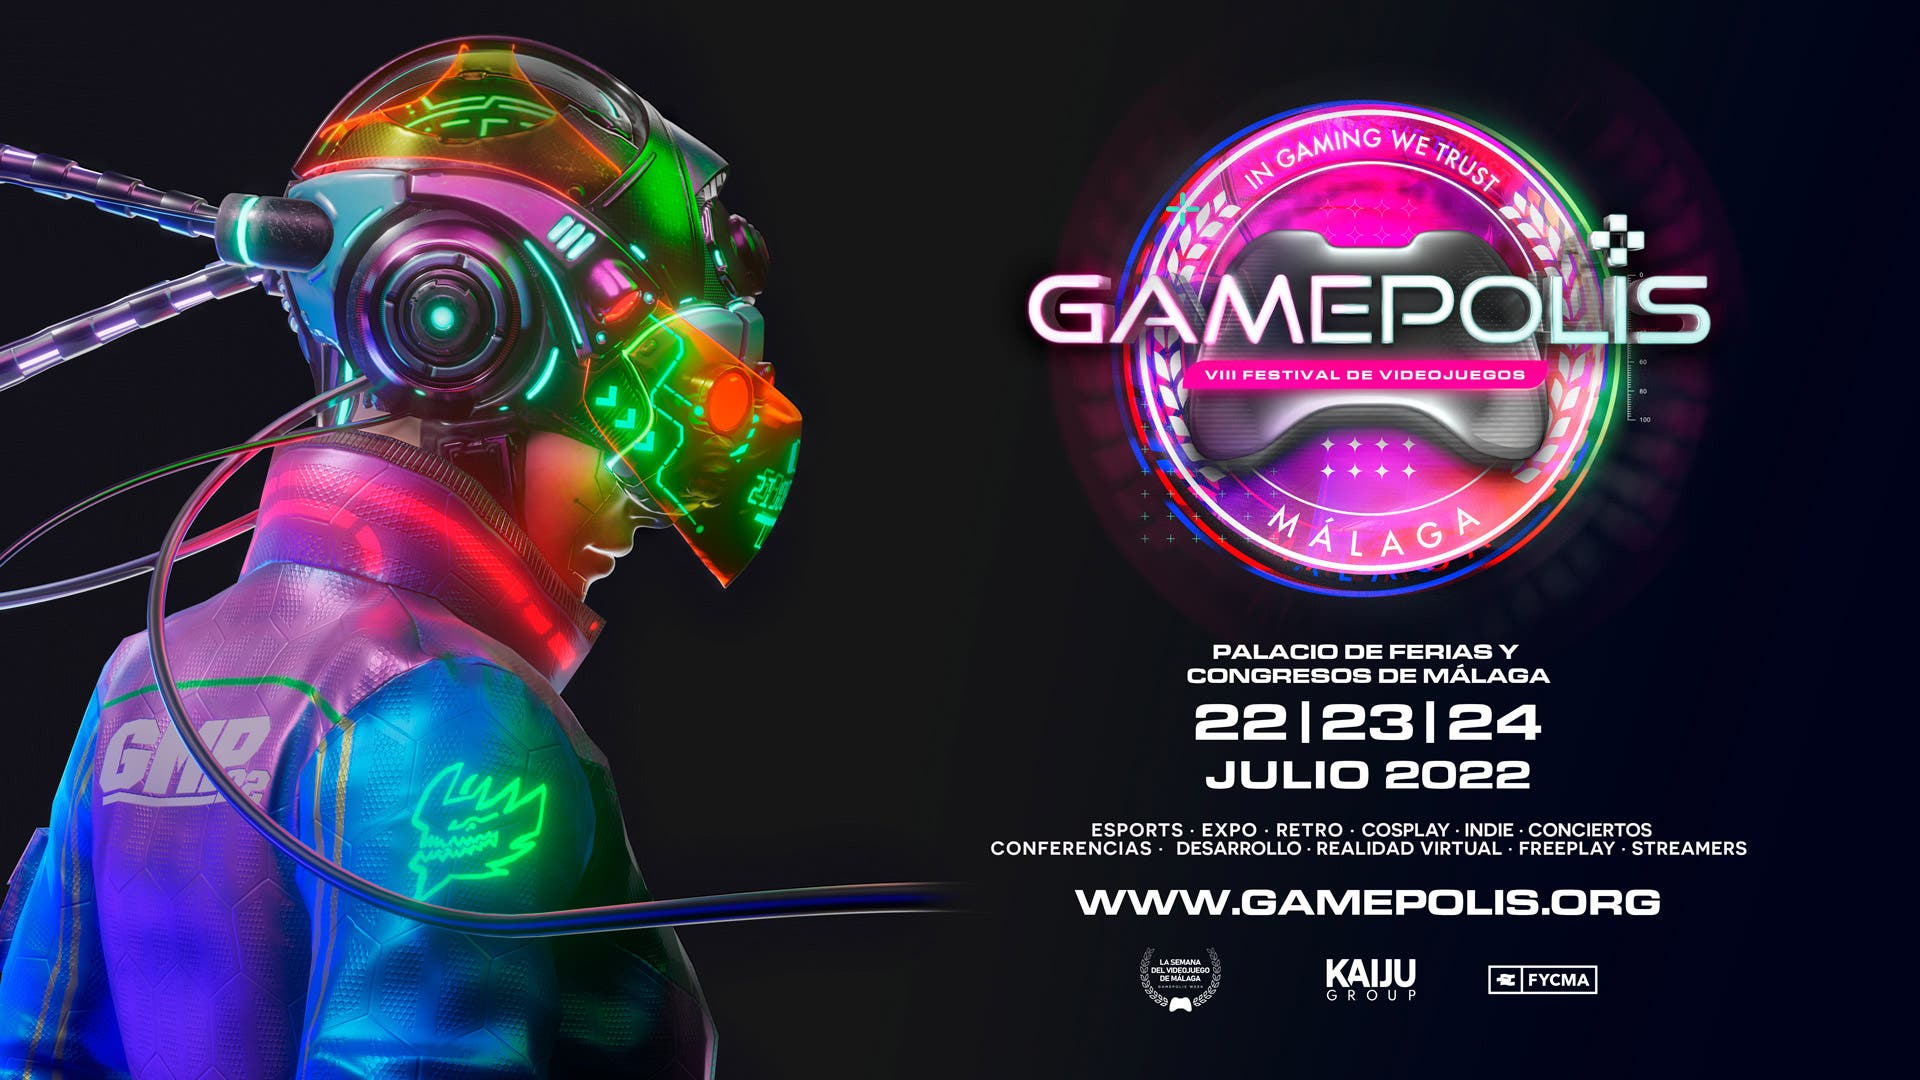 Imagen promocional de Gamepolis